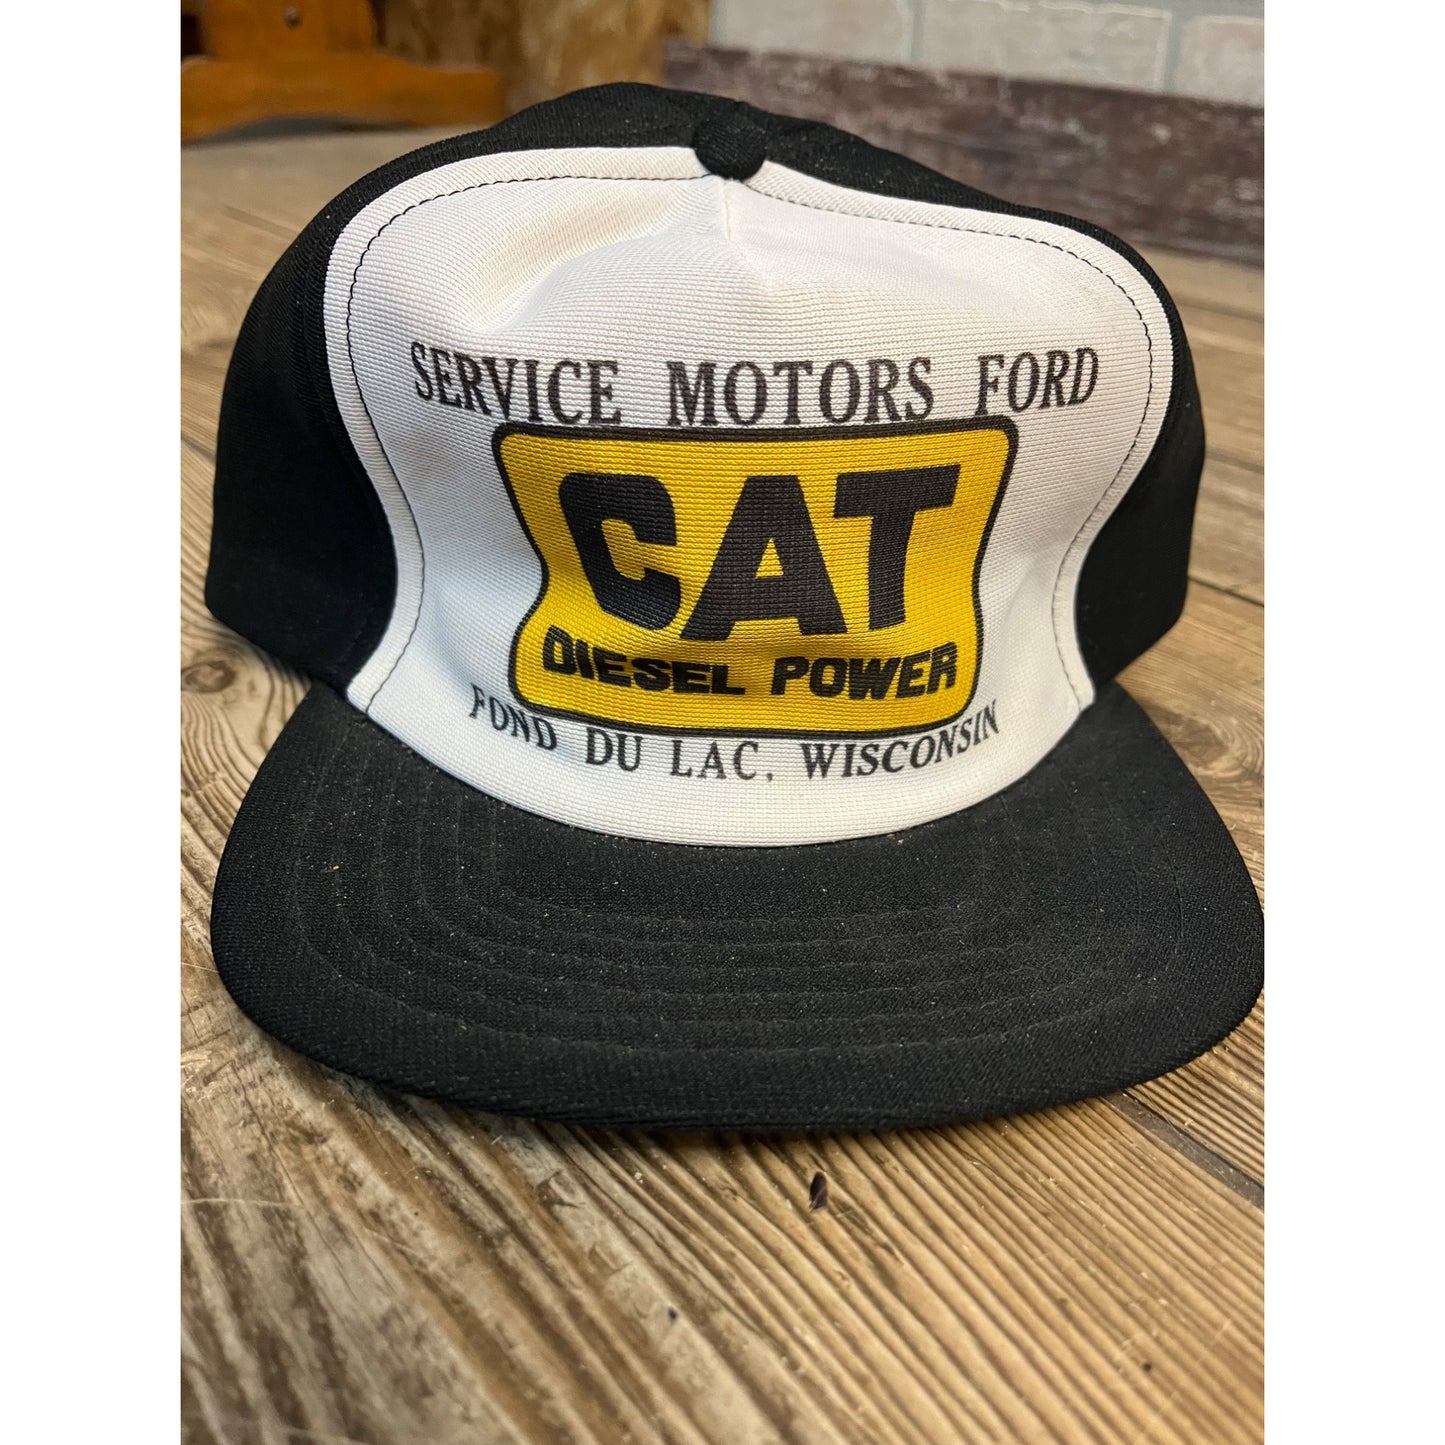 Vintage CAT Caterpillar Diesel Power Fond du Lac Wis Advertising Trucker Hat Cap